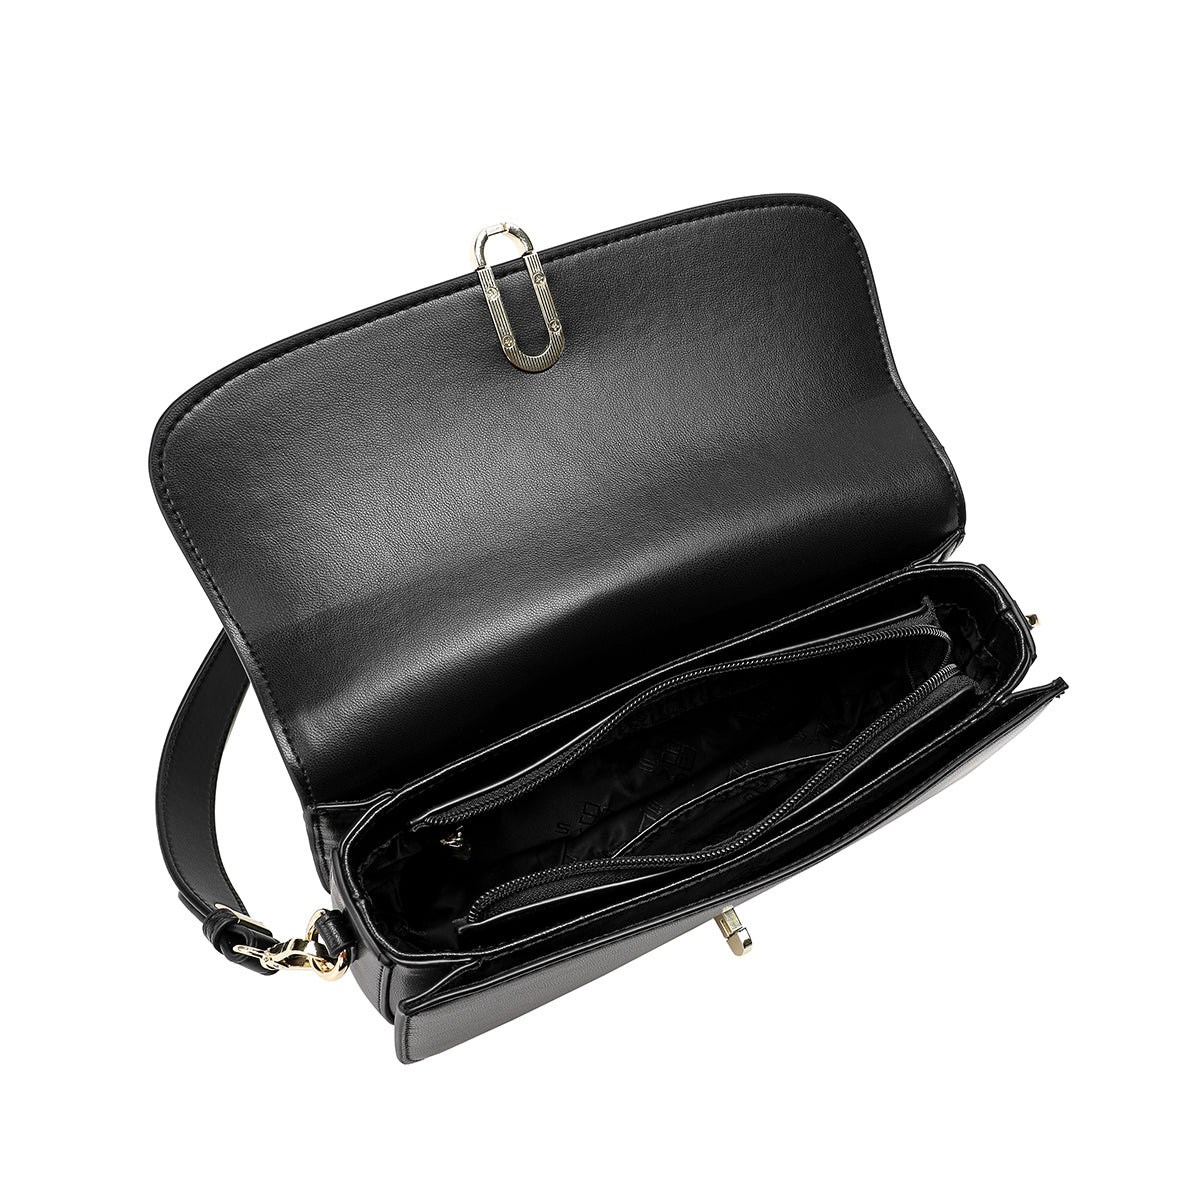 Classic bag made of luxurious microfiber - black, width 24 cm